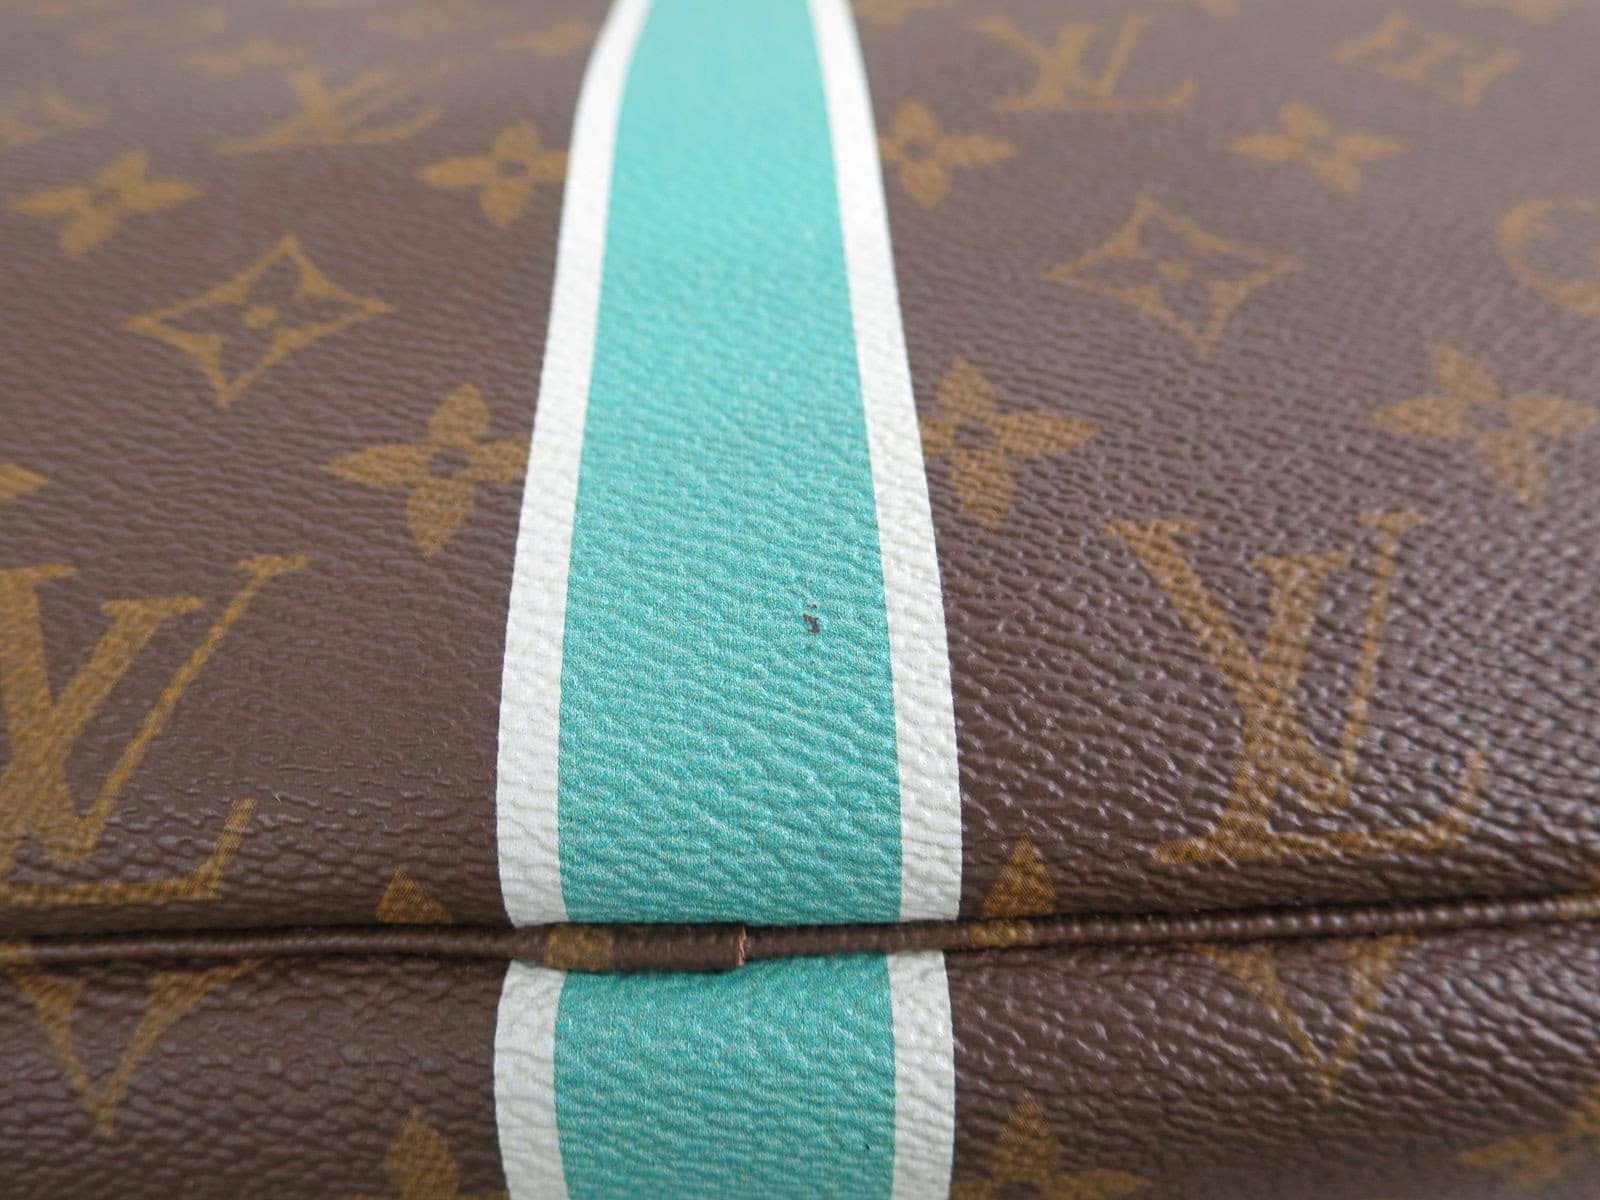 Louis Vuitton, Bags, Lv Neverfull Mm Mon Monogram